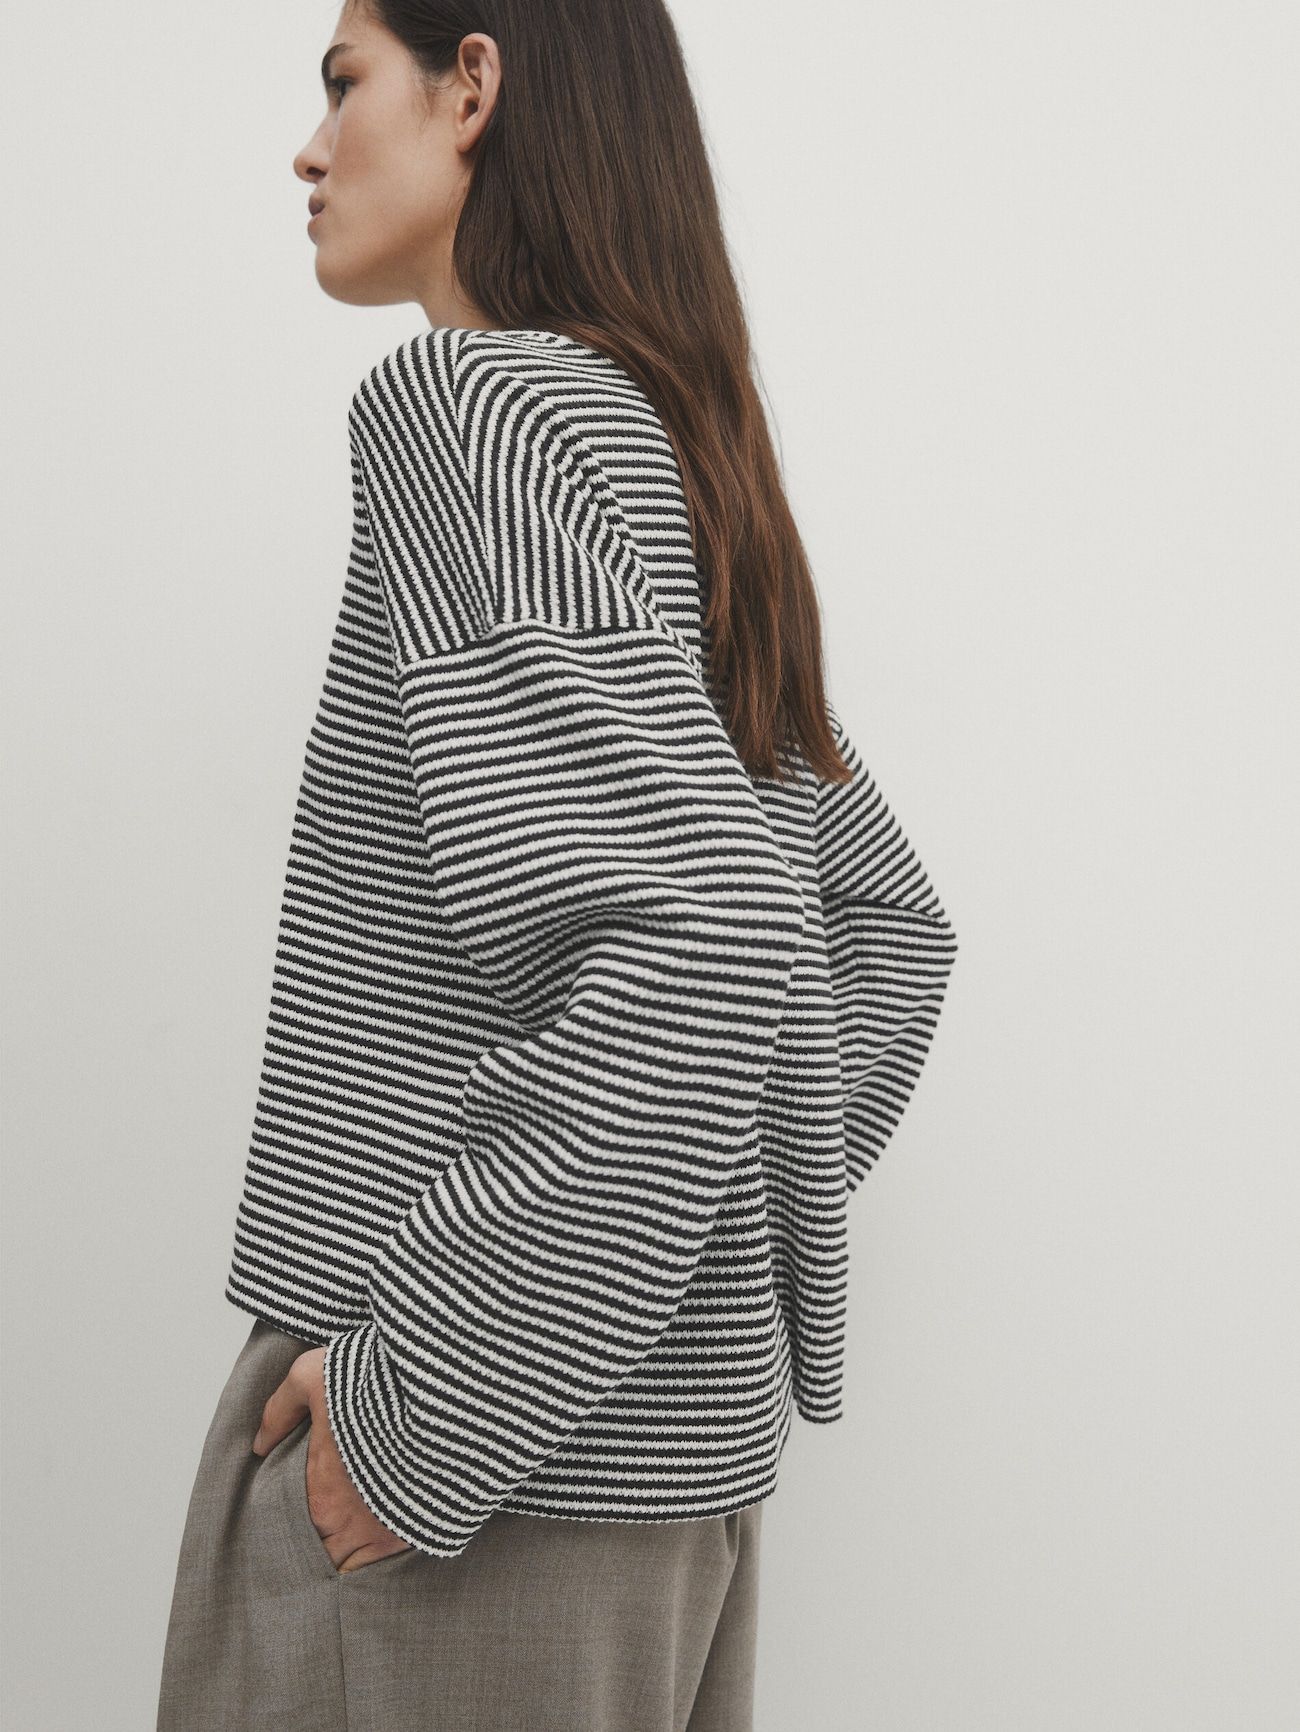 Cotton blend textured striped sweatshirt | Massimo Dutti UK